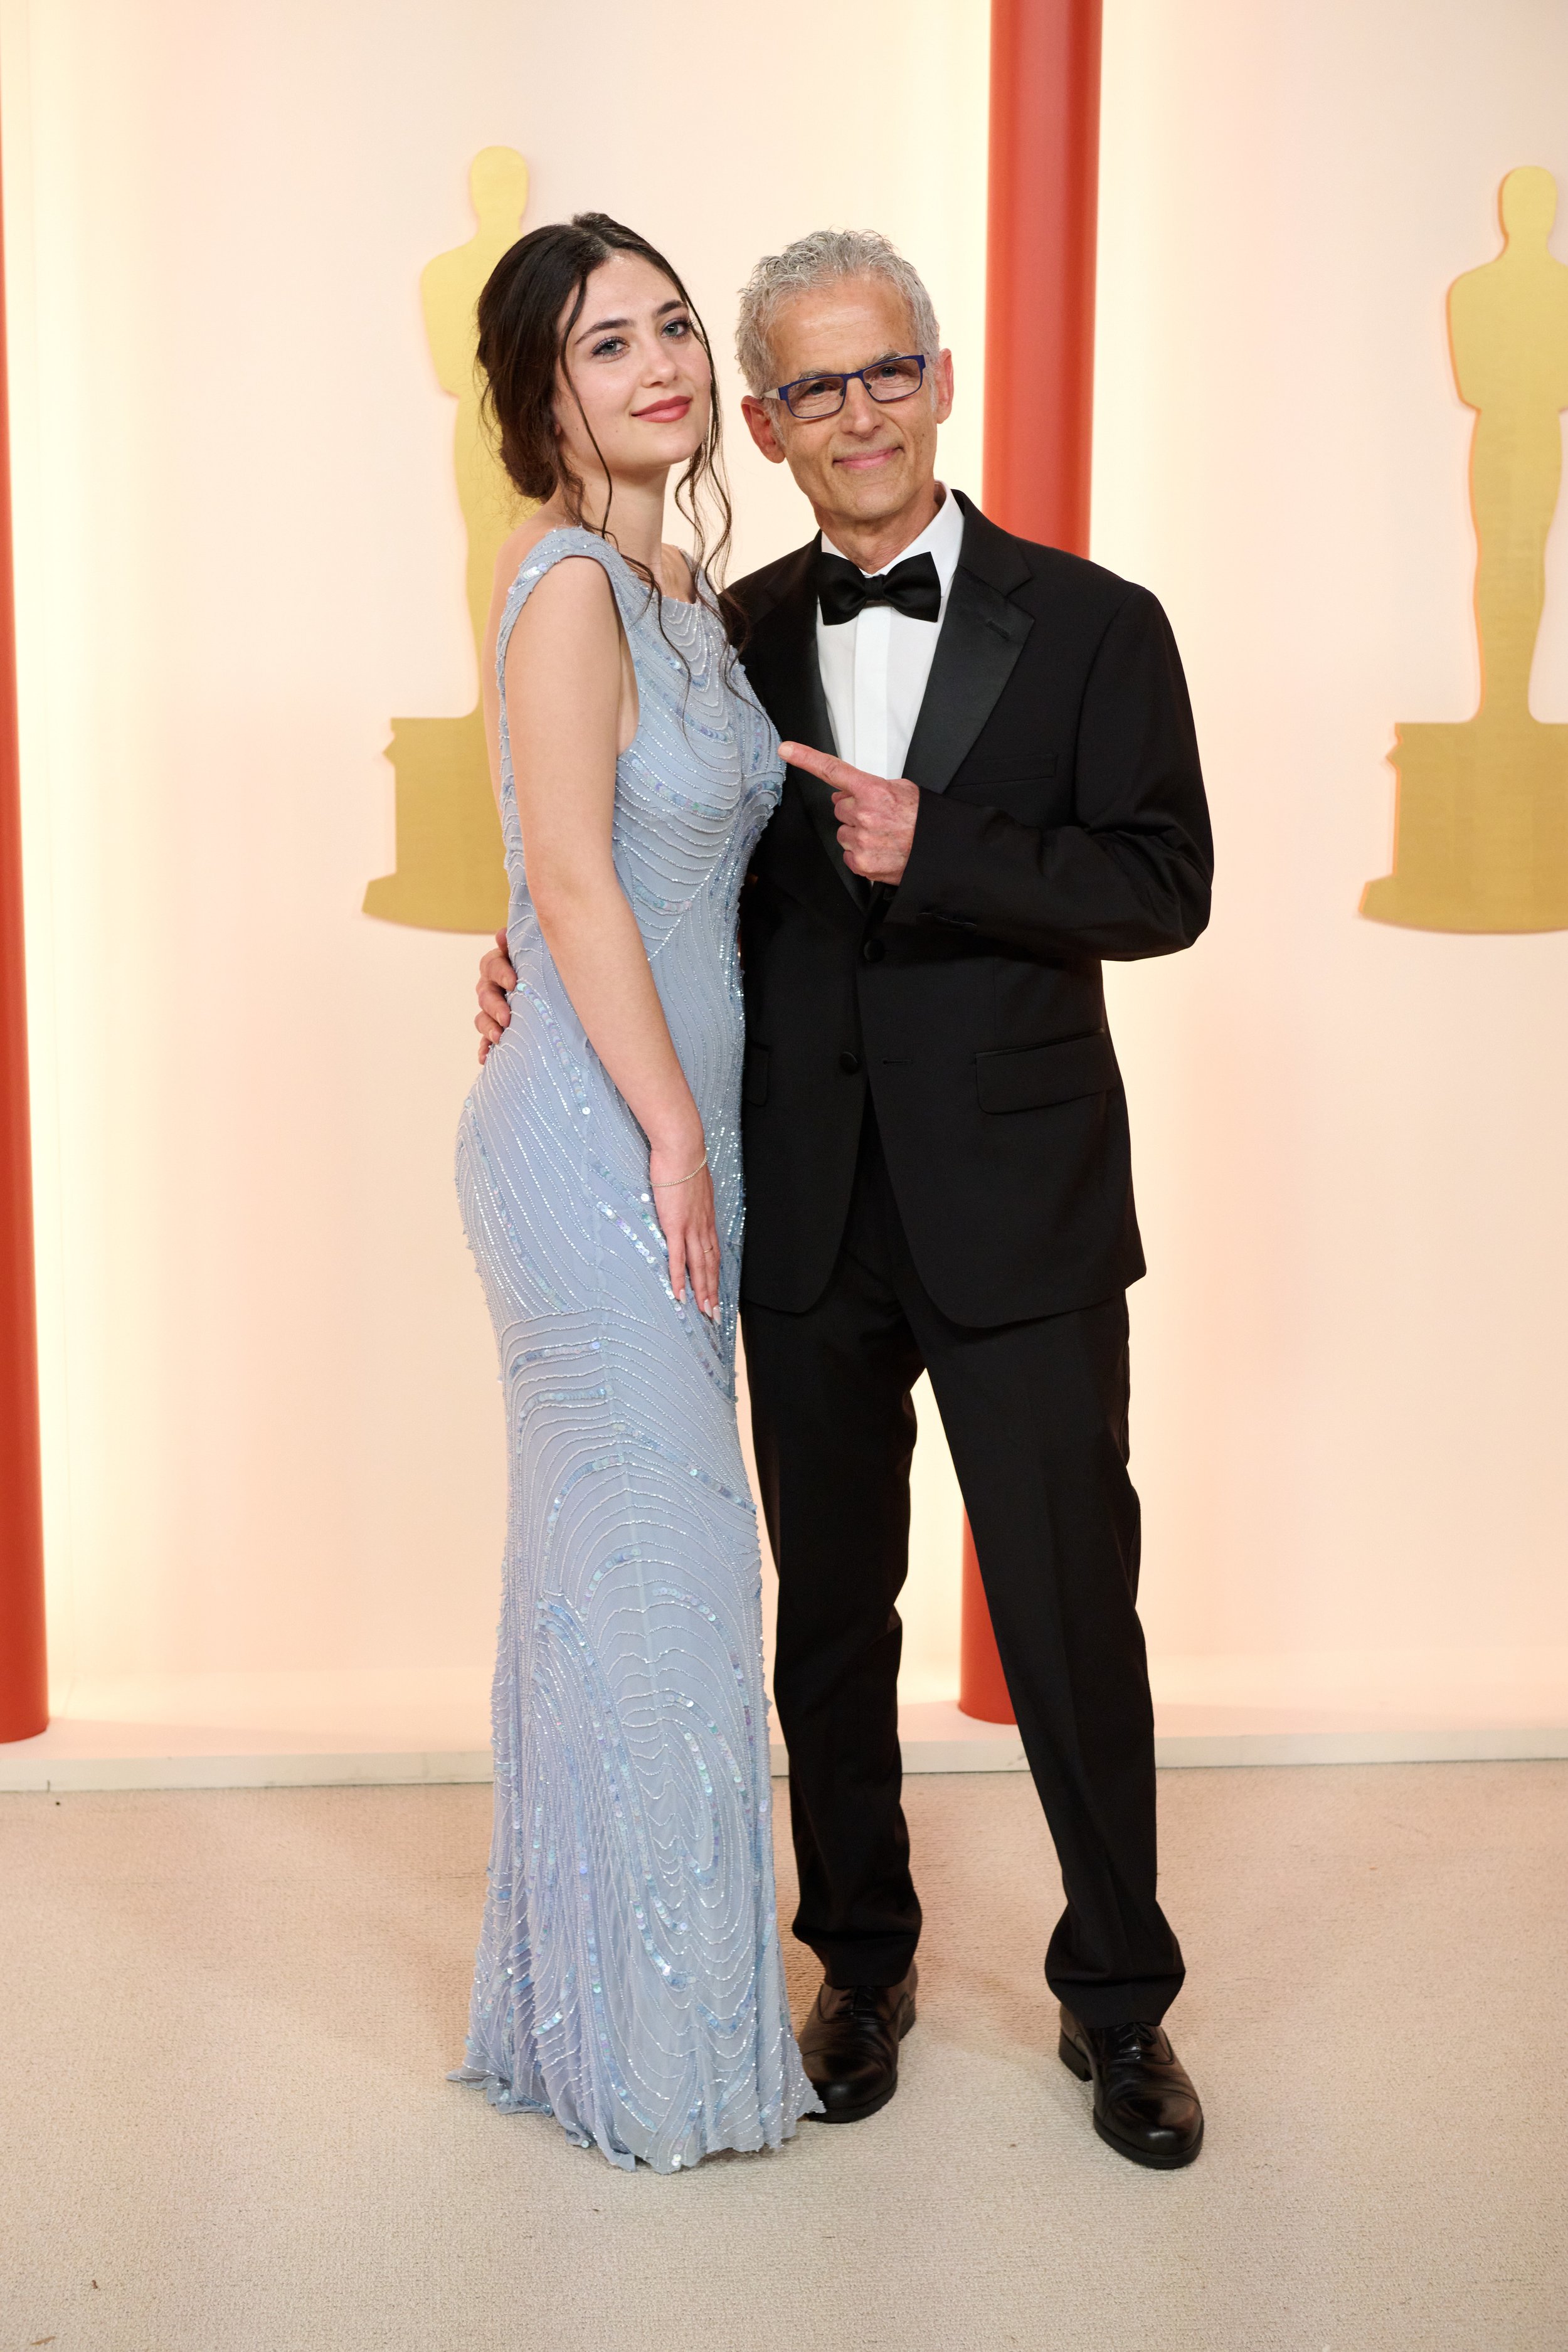 Ella Rosenblatt and Oscar® nominee Jay Rosenblatt arrive on the red carpet of The 95th Oscars